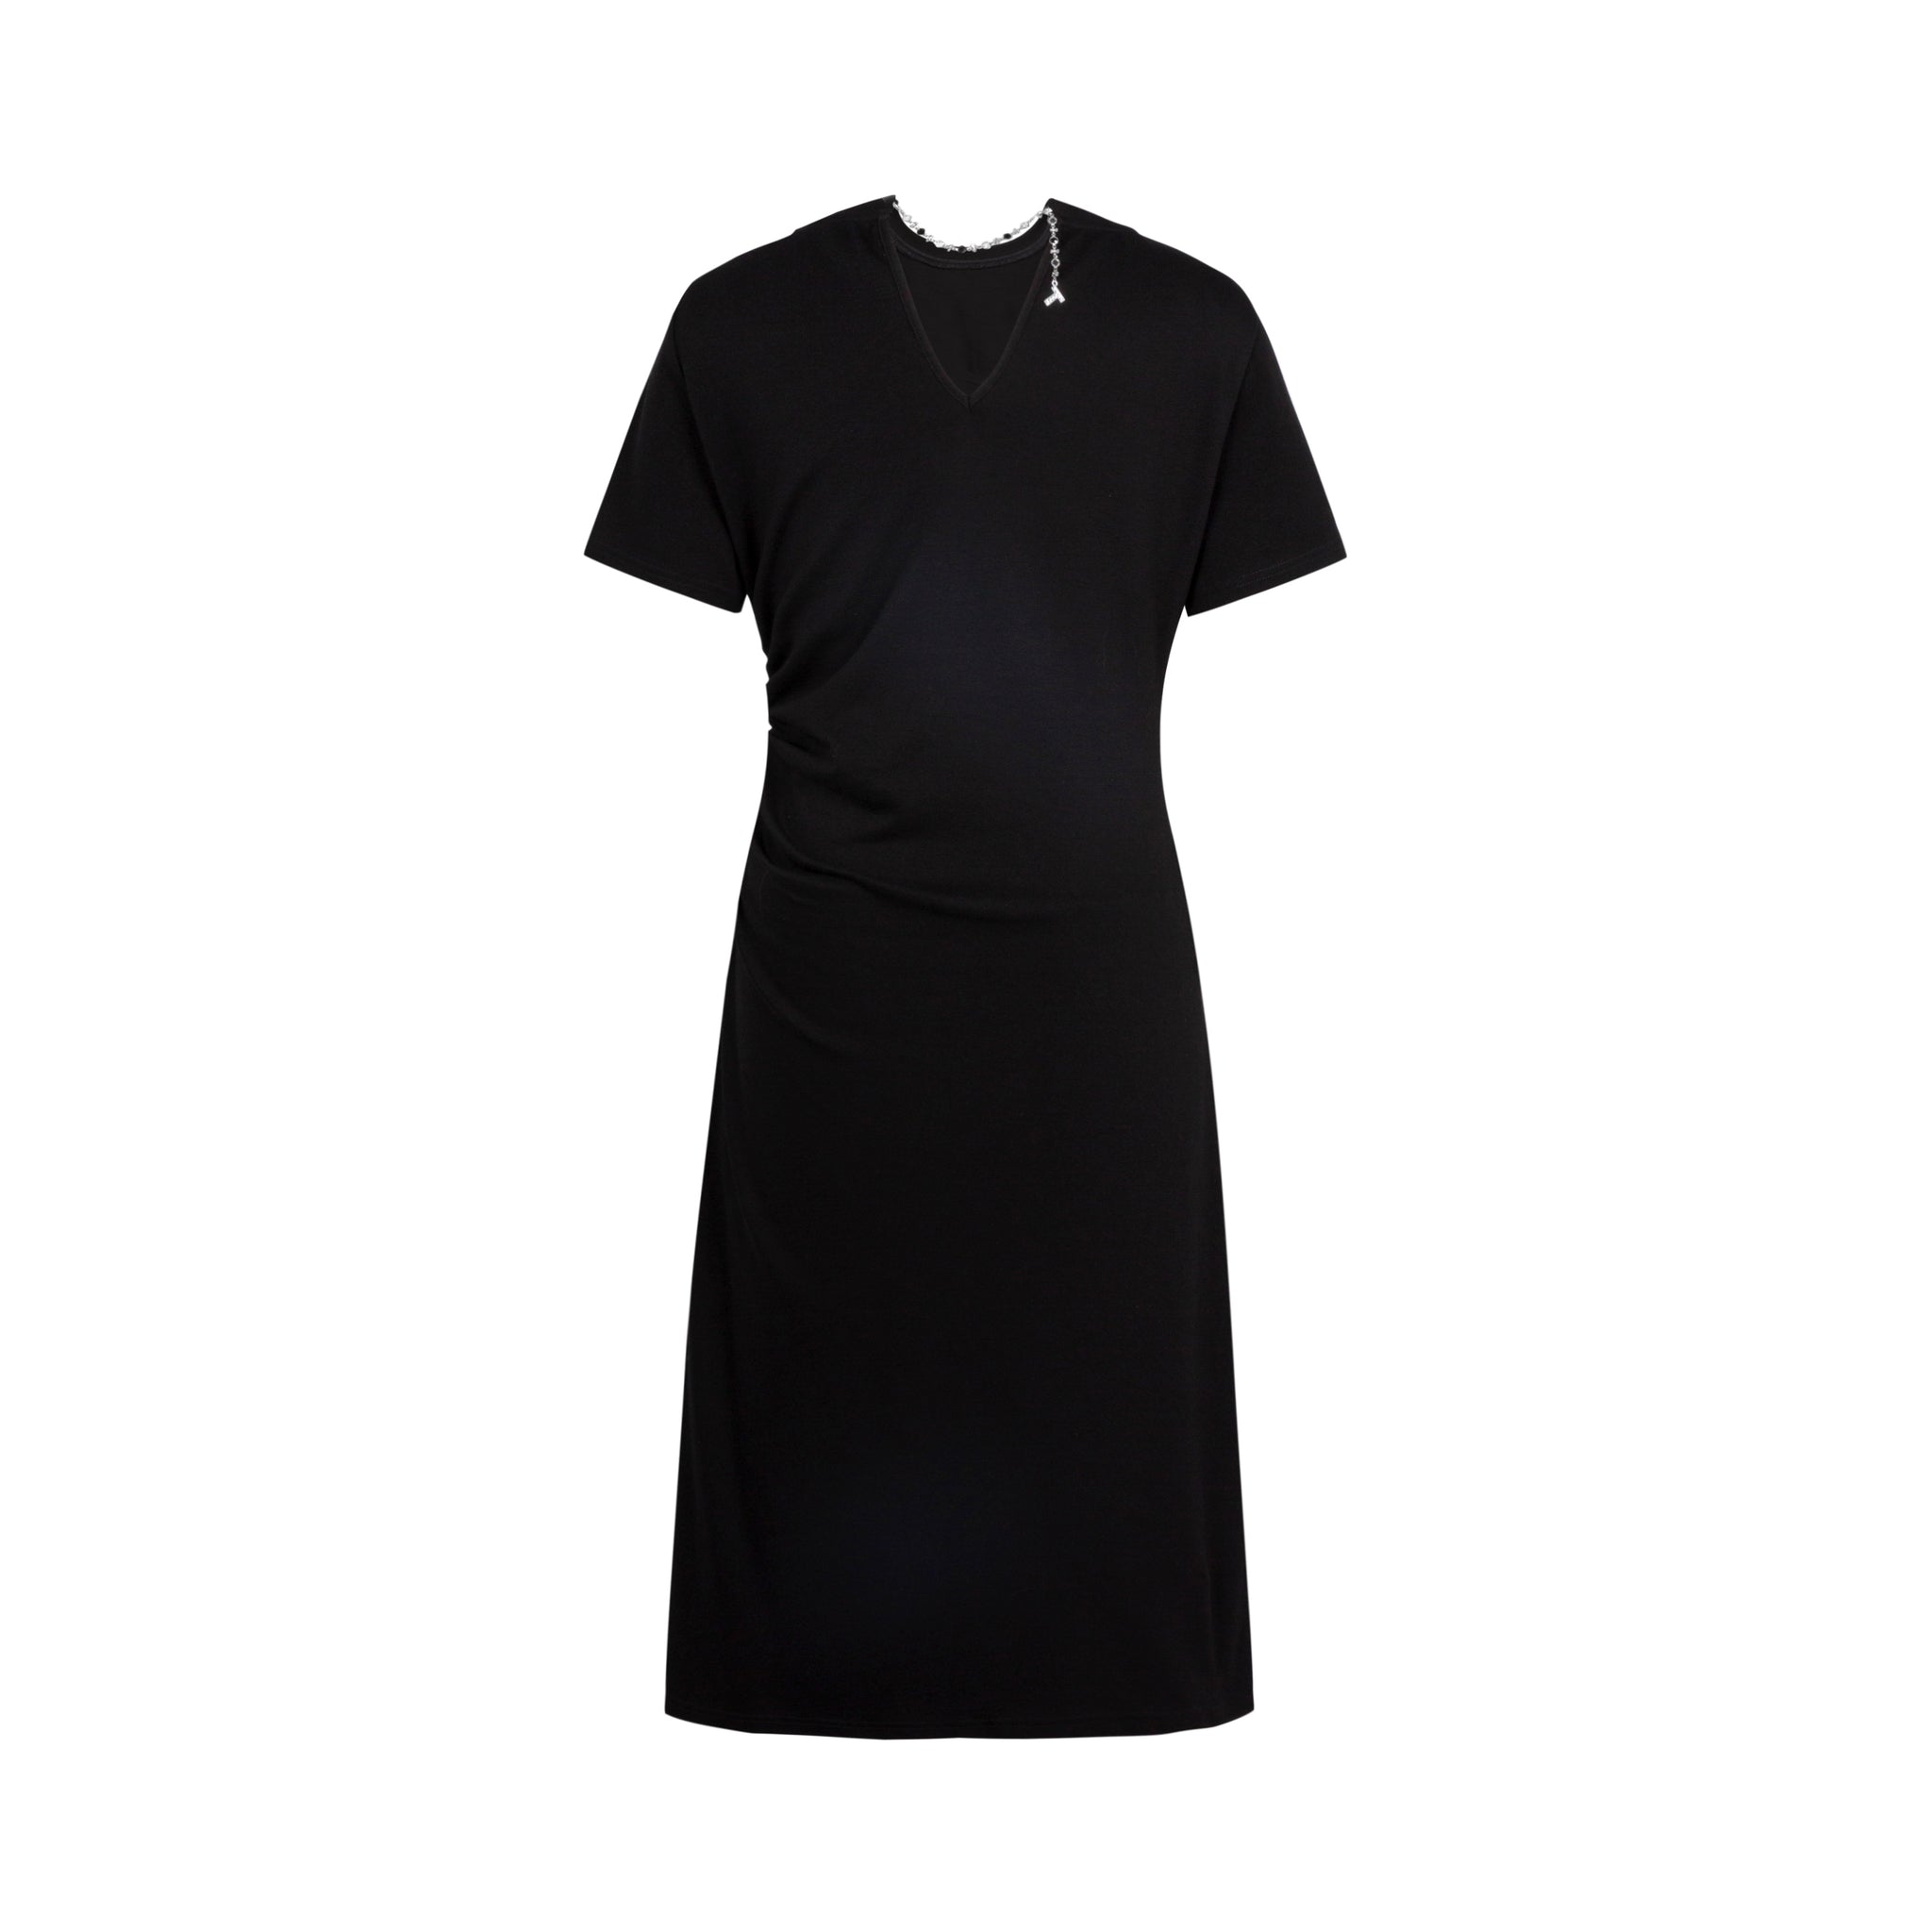 Black Rose Rhinestone Cutout Knit Dress